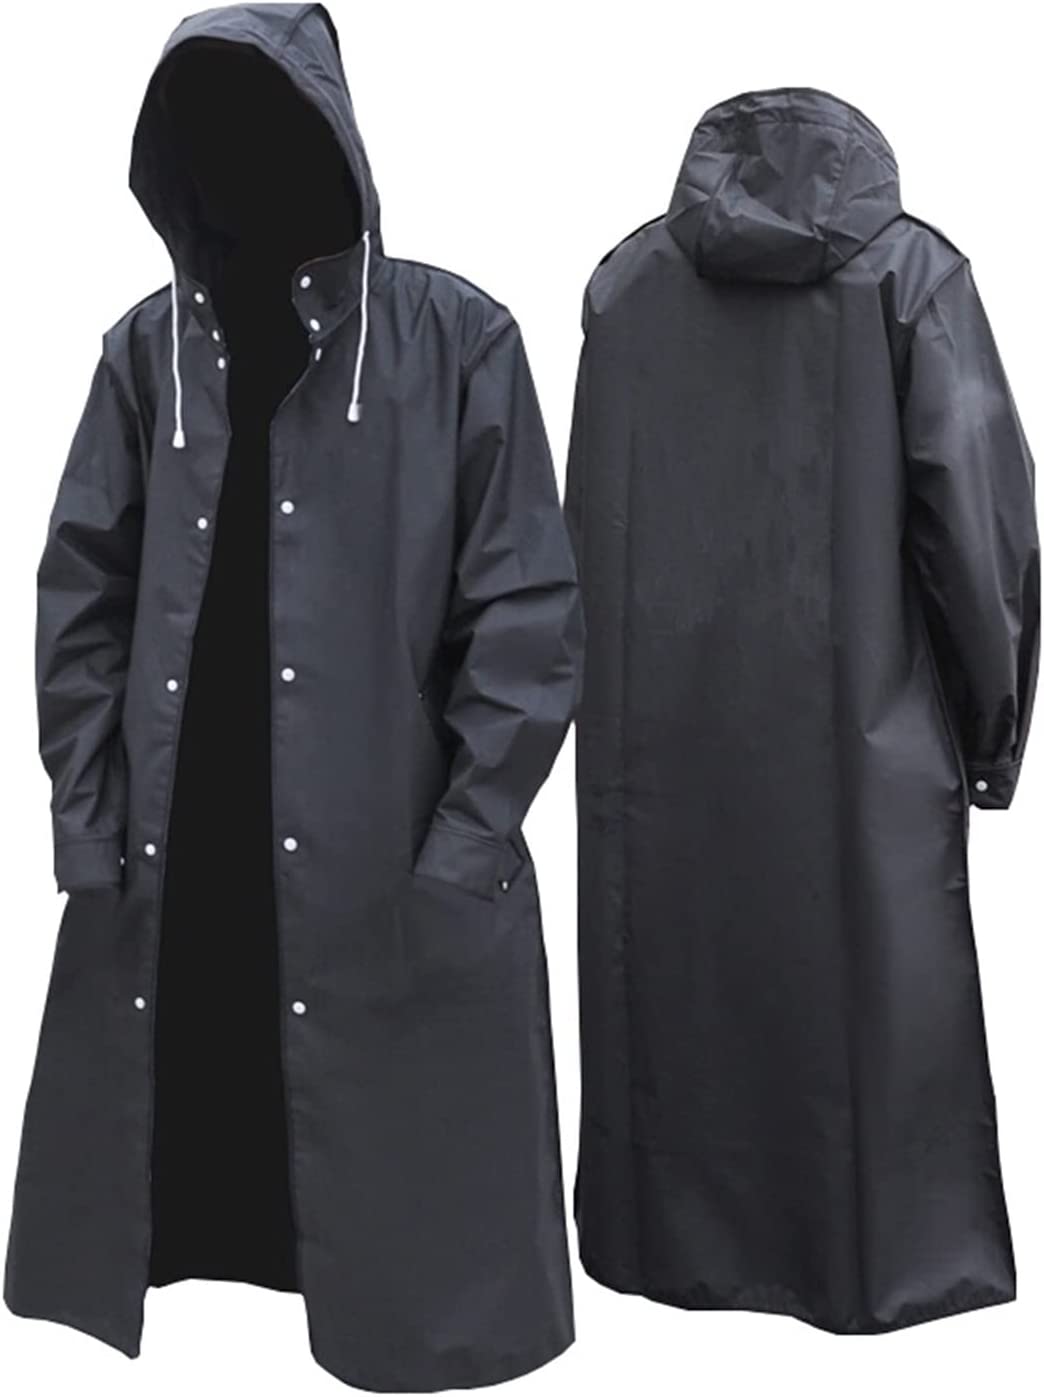 LRIKING Mens Hooded Long Rain Coat Outdoor 2PCS Rain Poncho Black Raincoat Portable Reusable Rainwear for Unisex-Adult (Color : Black, Size : XXXL)